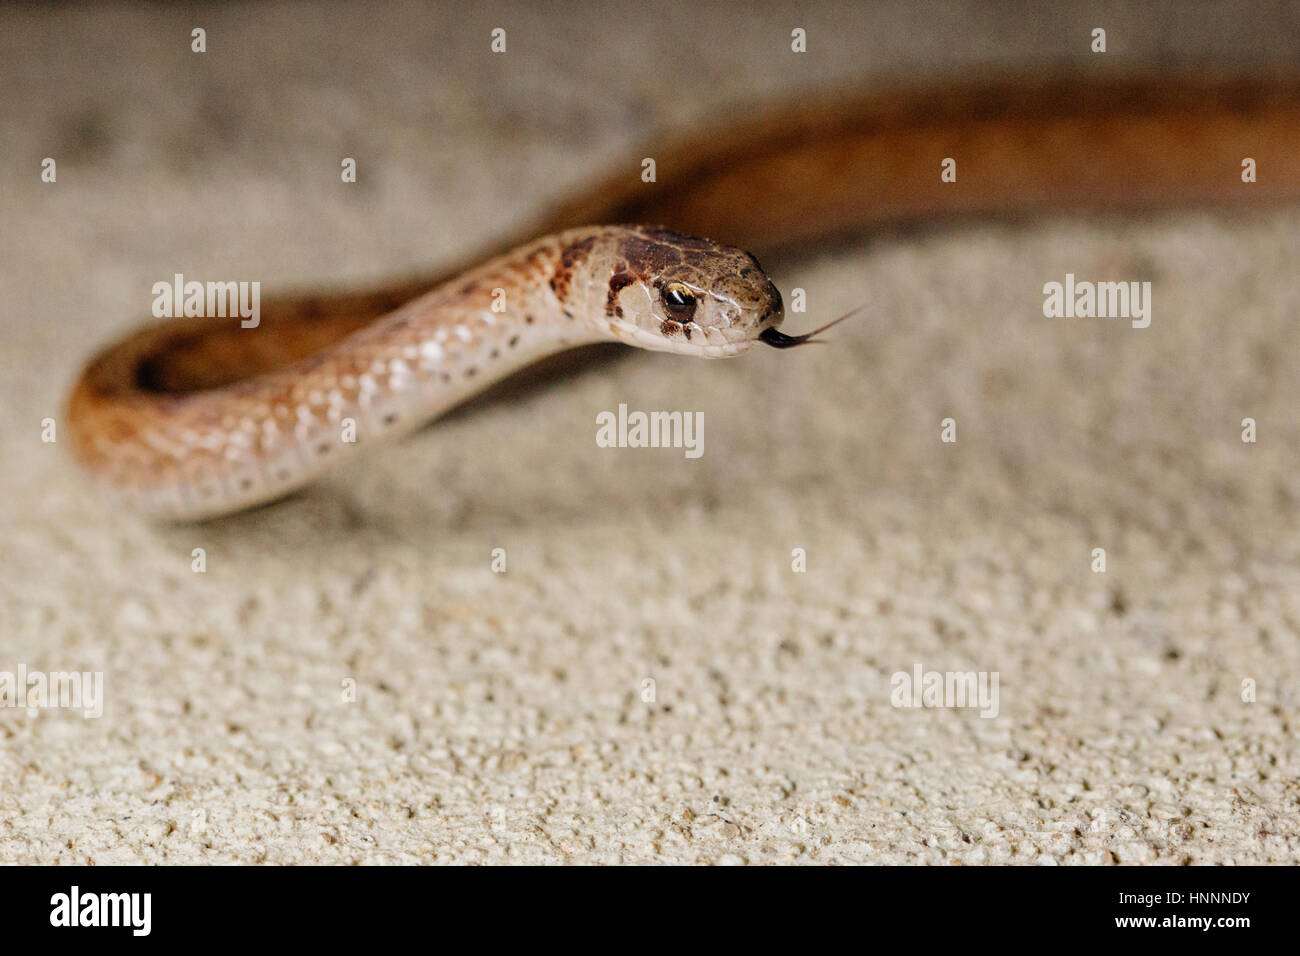 High angle close-up of brown snake flicking tongue Stock Photo